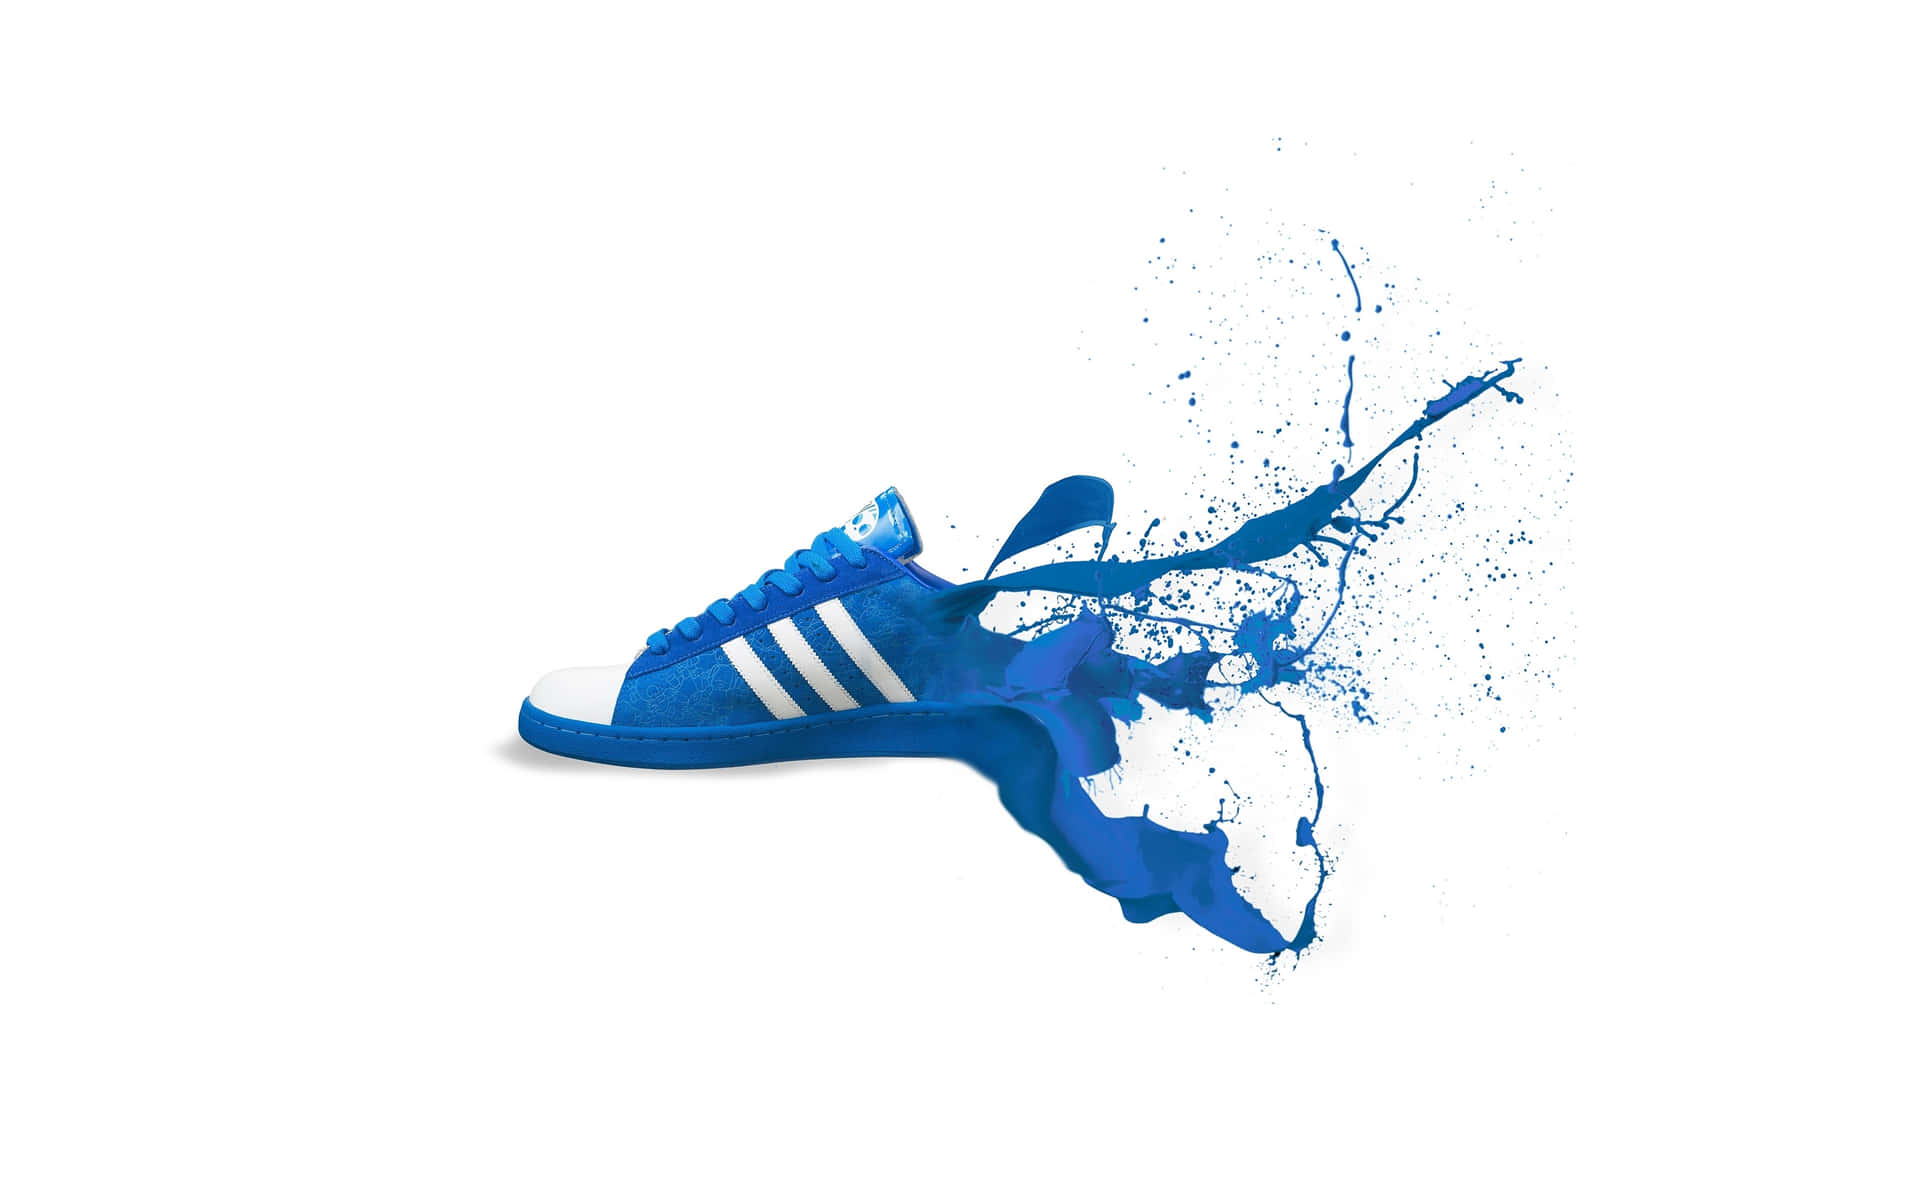 Dynamic Blue Sneaker Splash Wallpaper